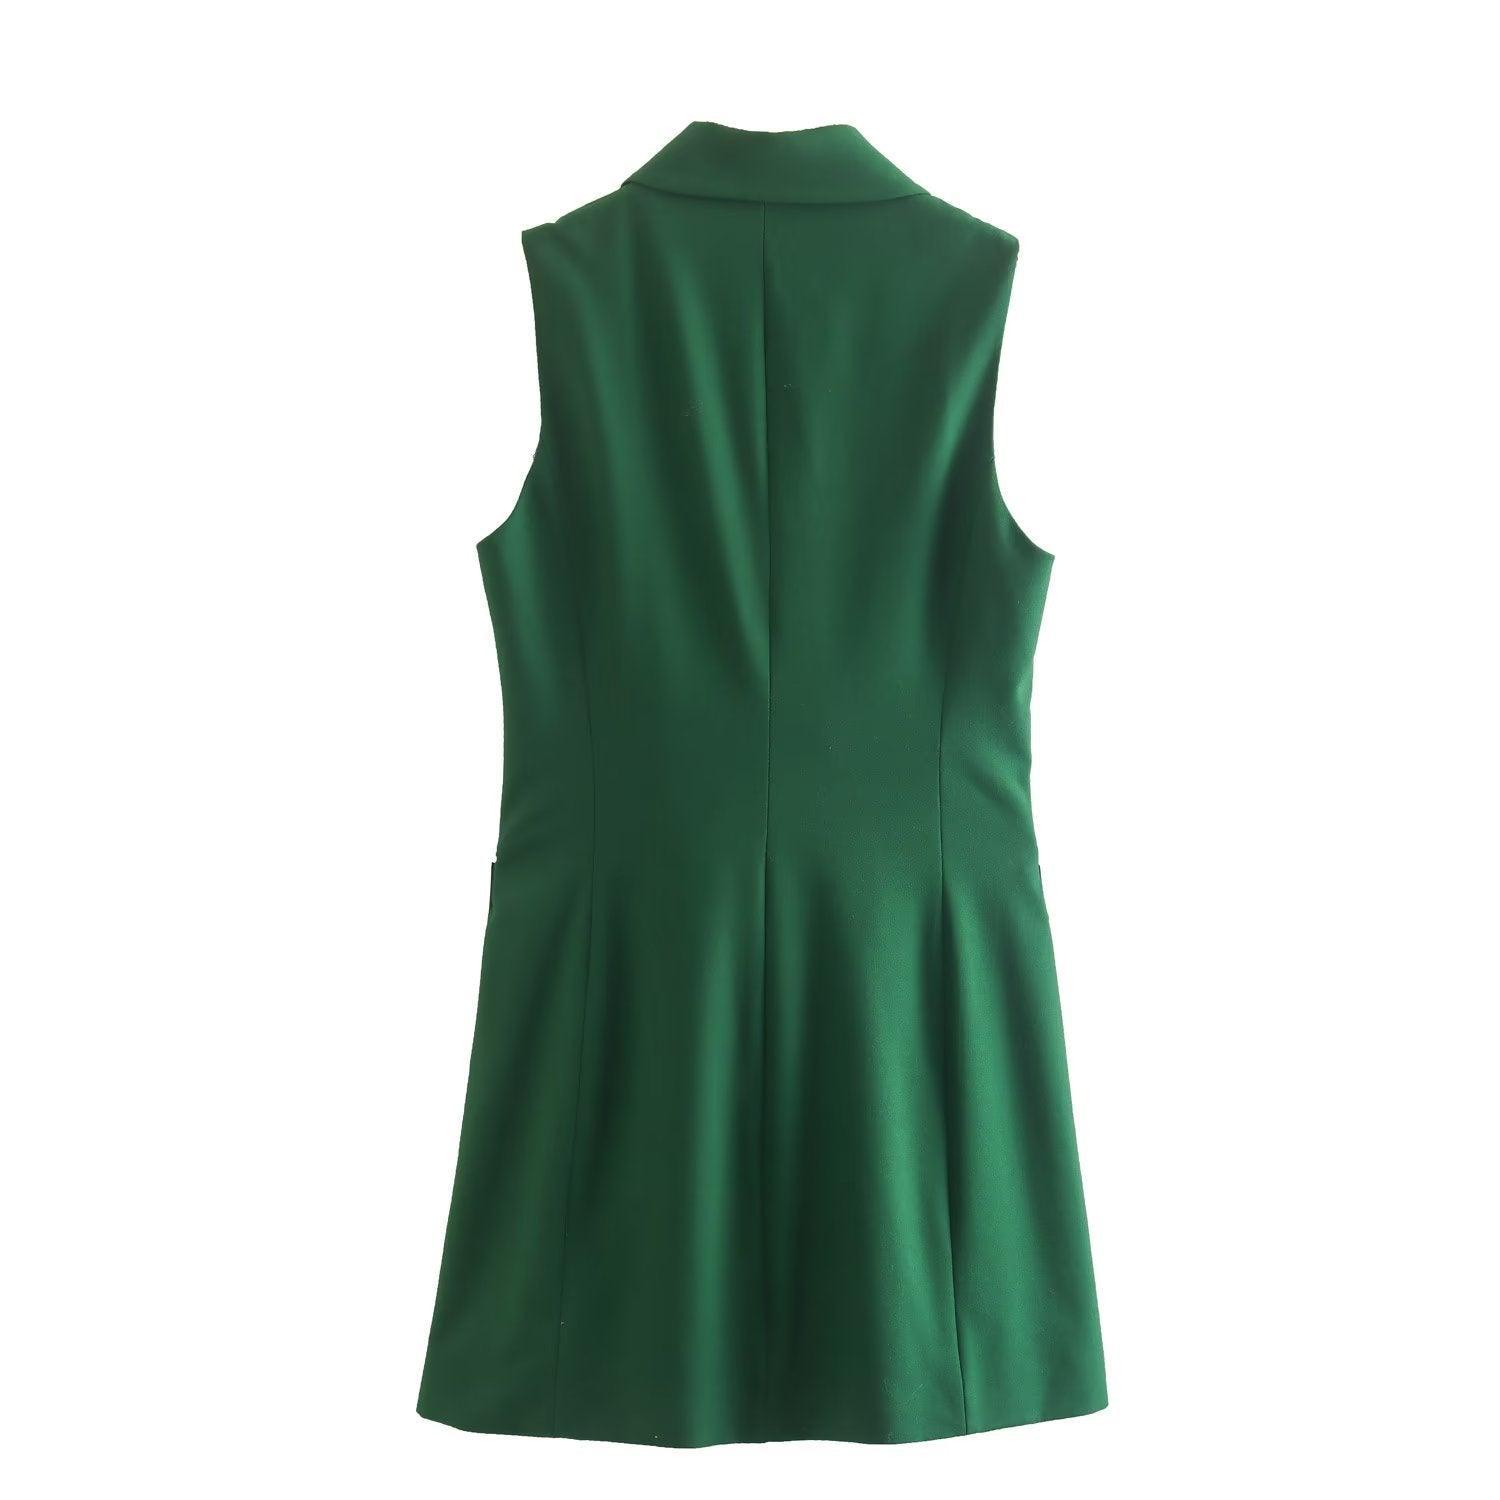 Elegant Style Lapel Green Long Vest for Office Wear - ForVanity jackets & coats, vest, women's clothing Vest